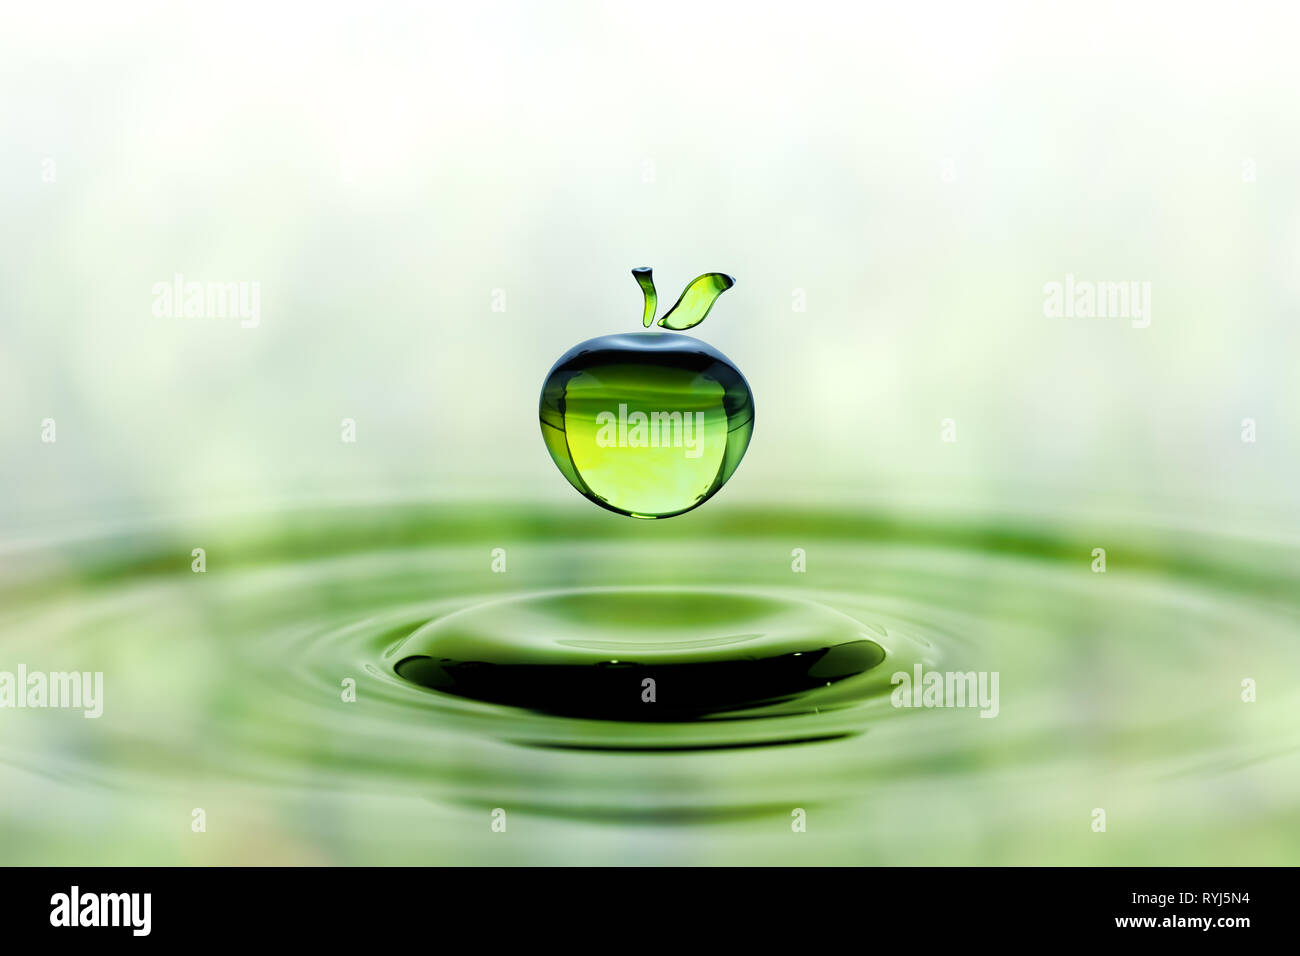 Rain drop in shape of green apple falling on blue water surface. Green blurred pattern in background. Stock Photo